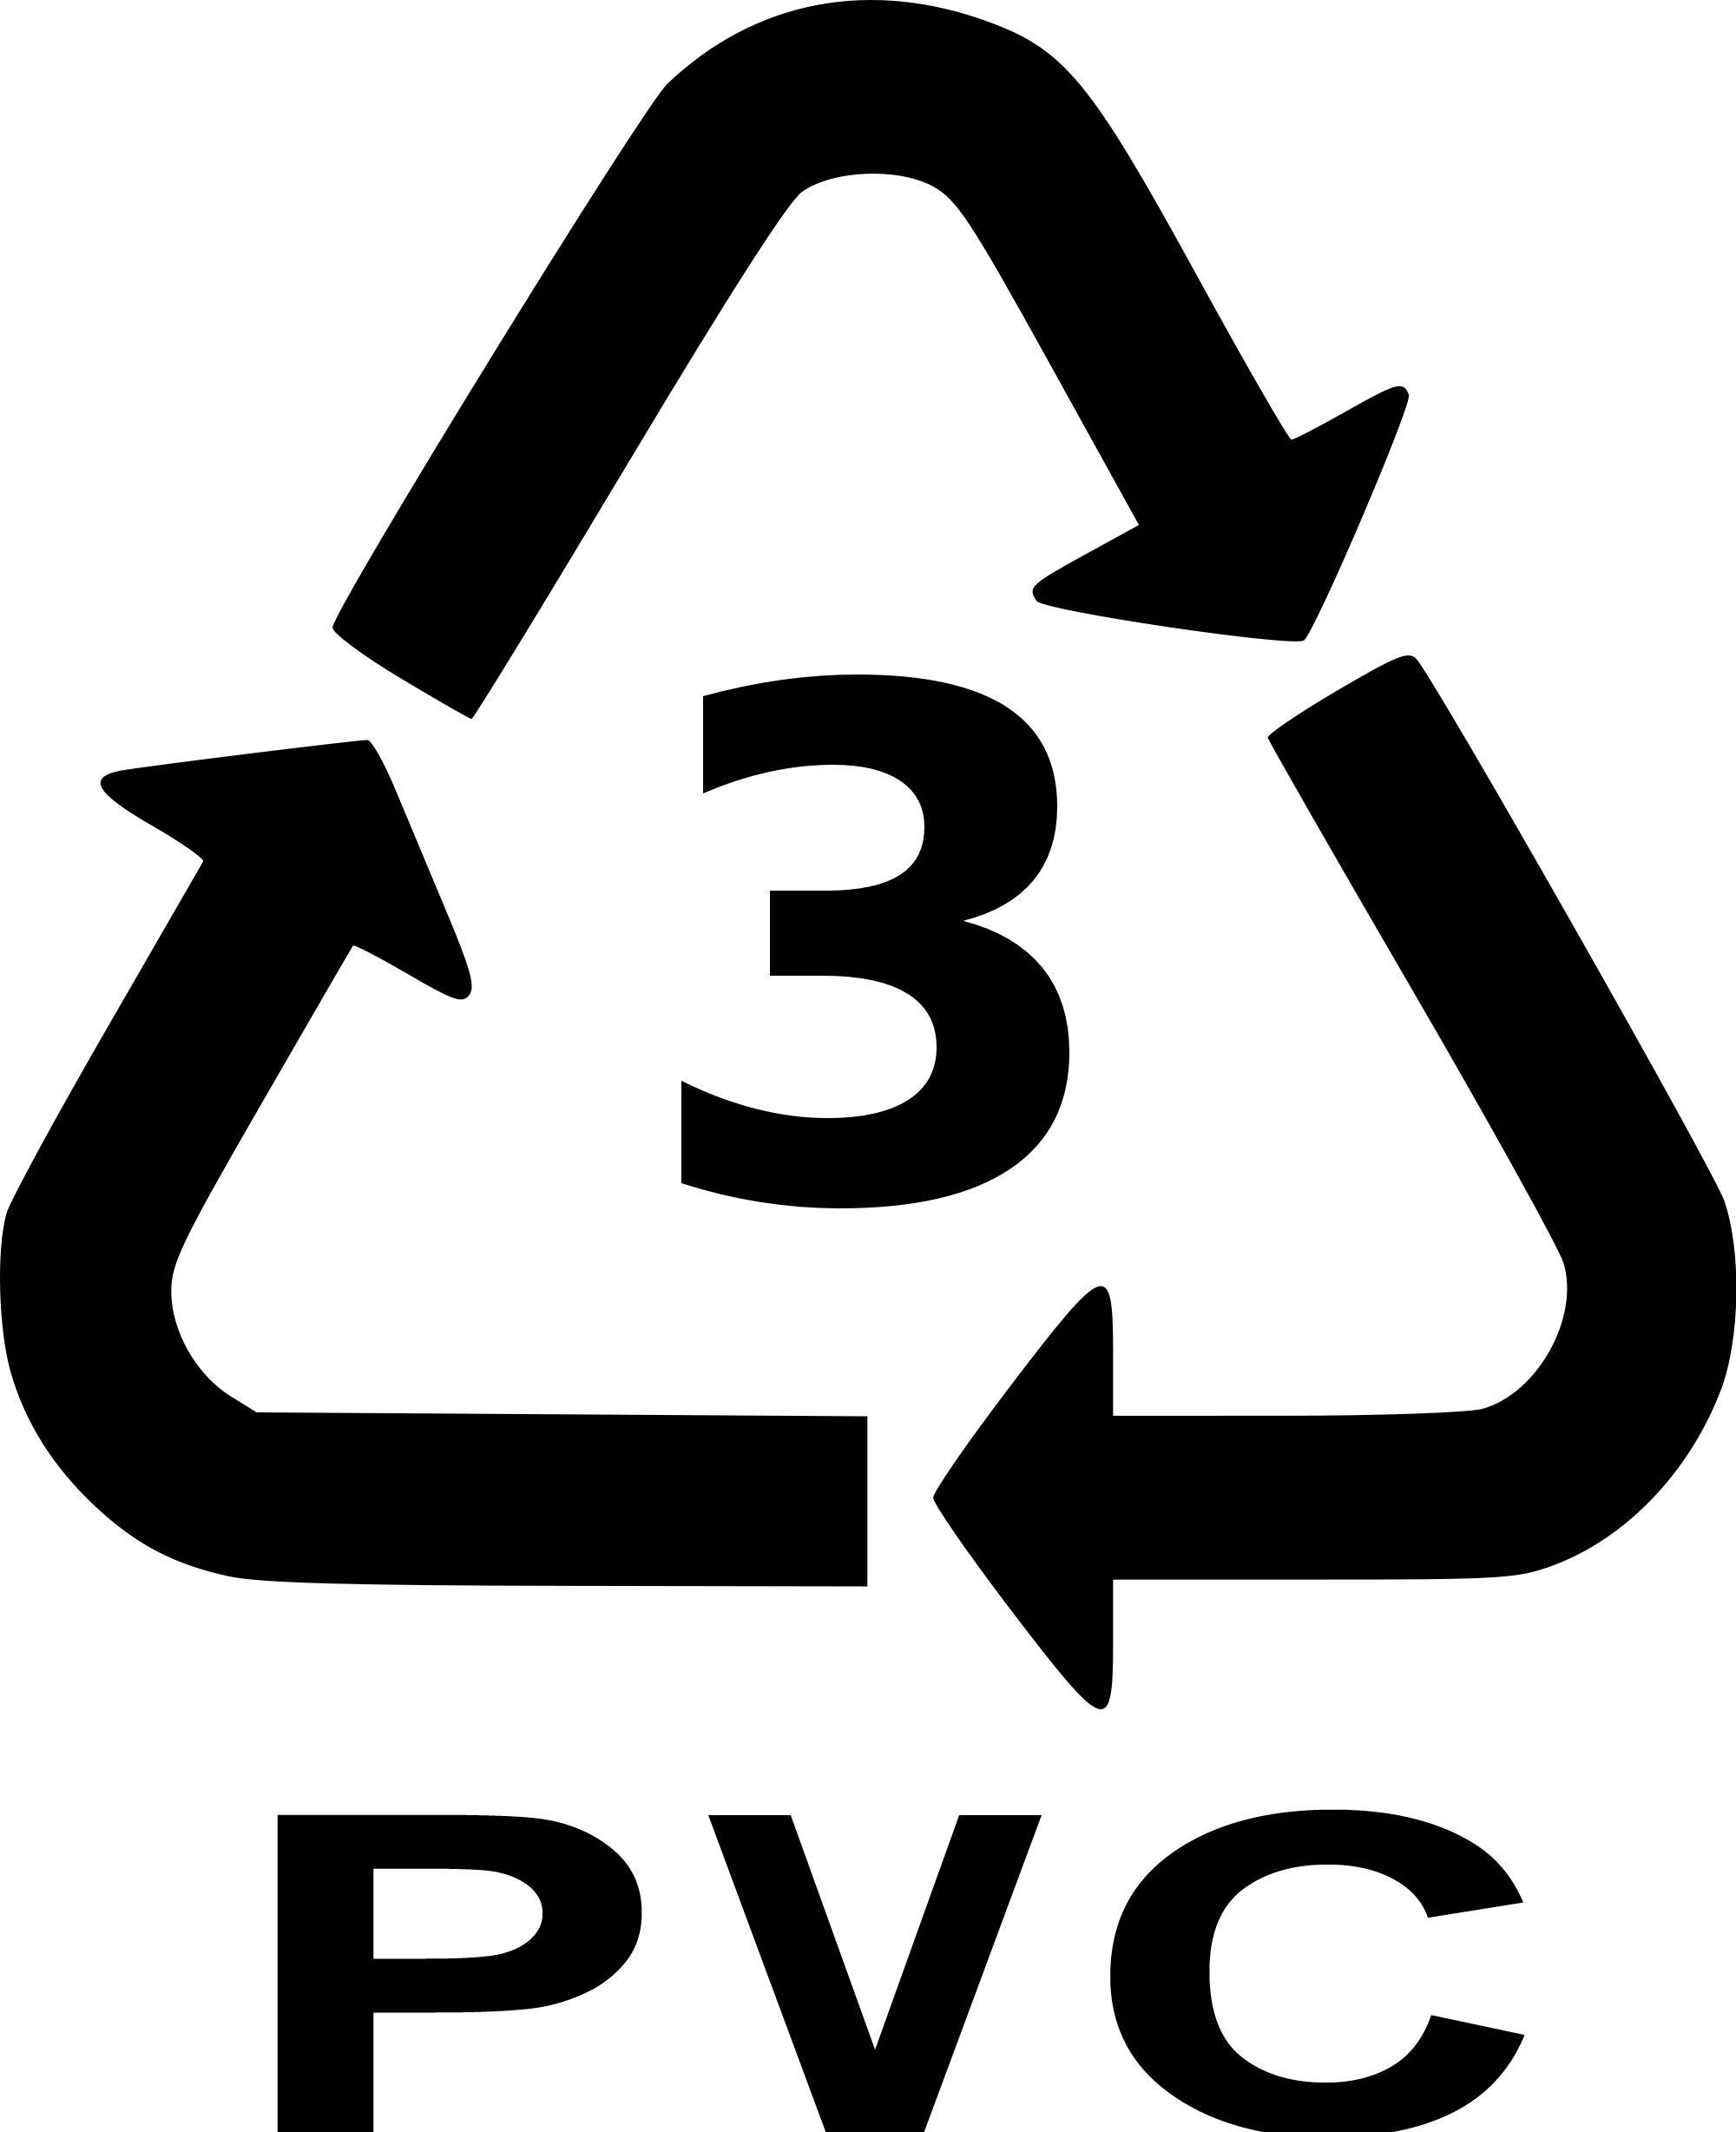 PVC Logo - Logos / Plastic Resin Code - 3 PVC.png